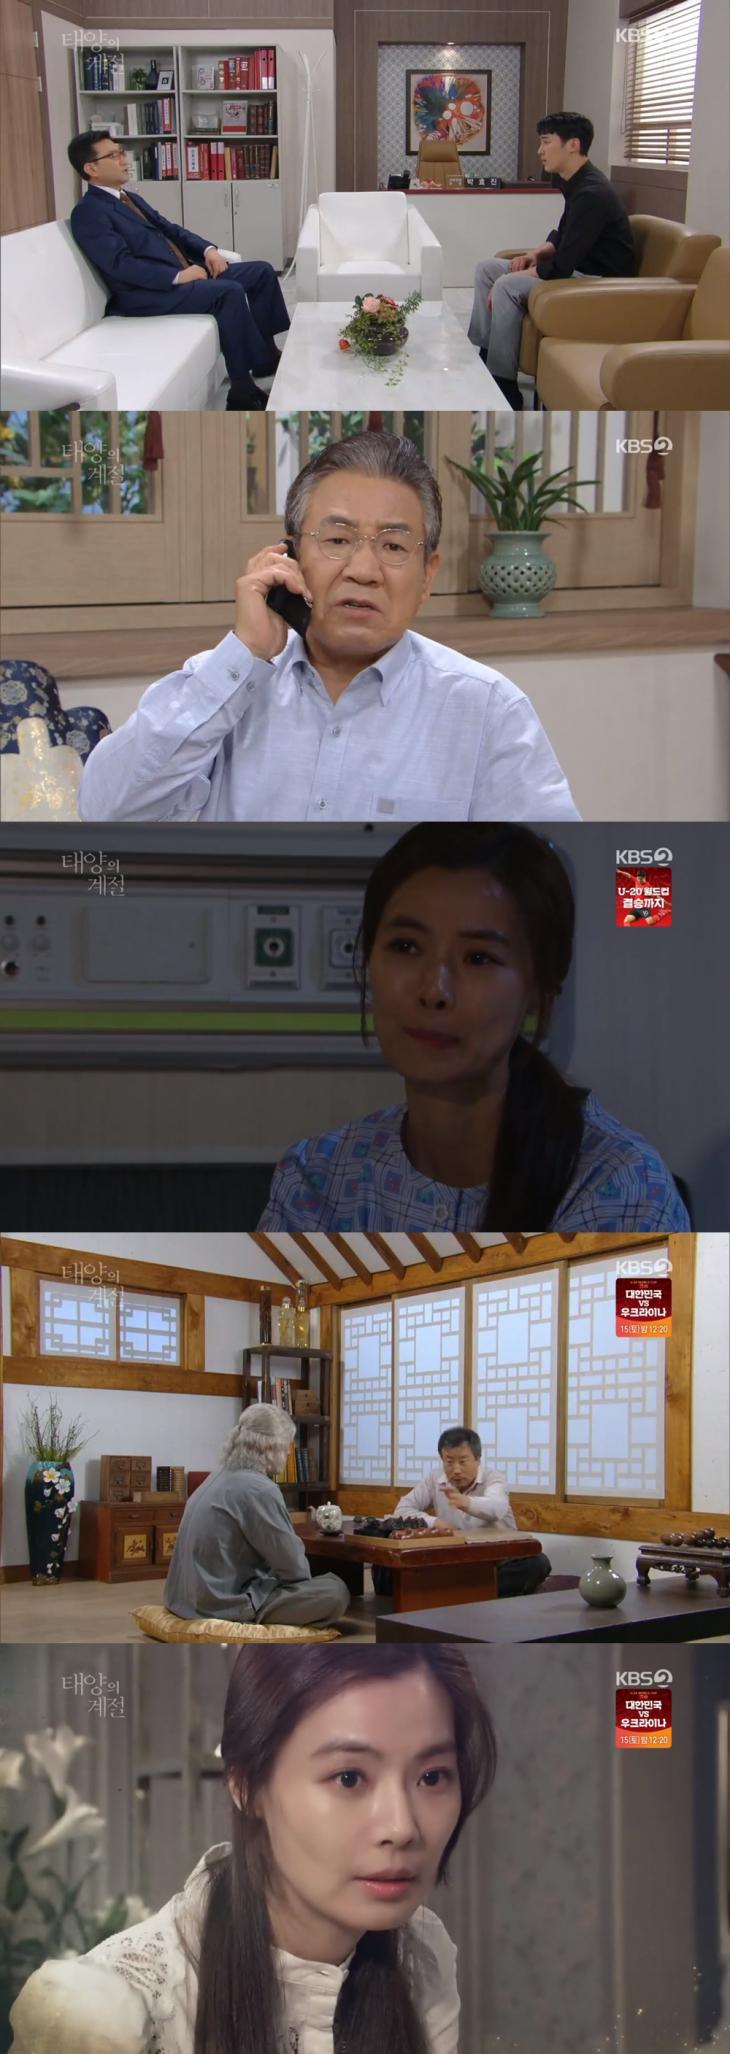 KBS2 '태양의 계절' 방송 캡쳐